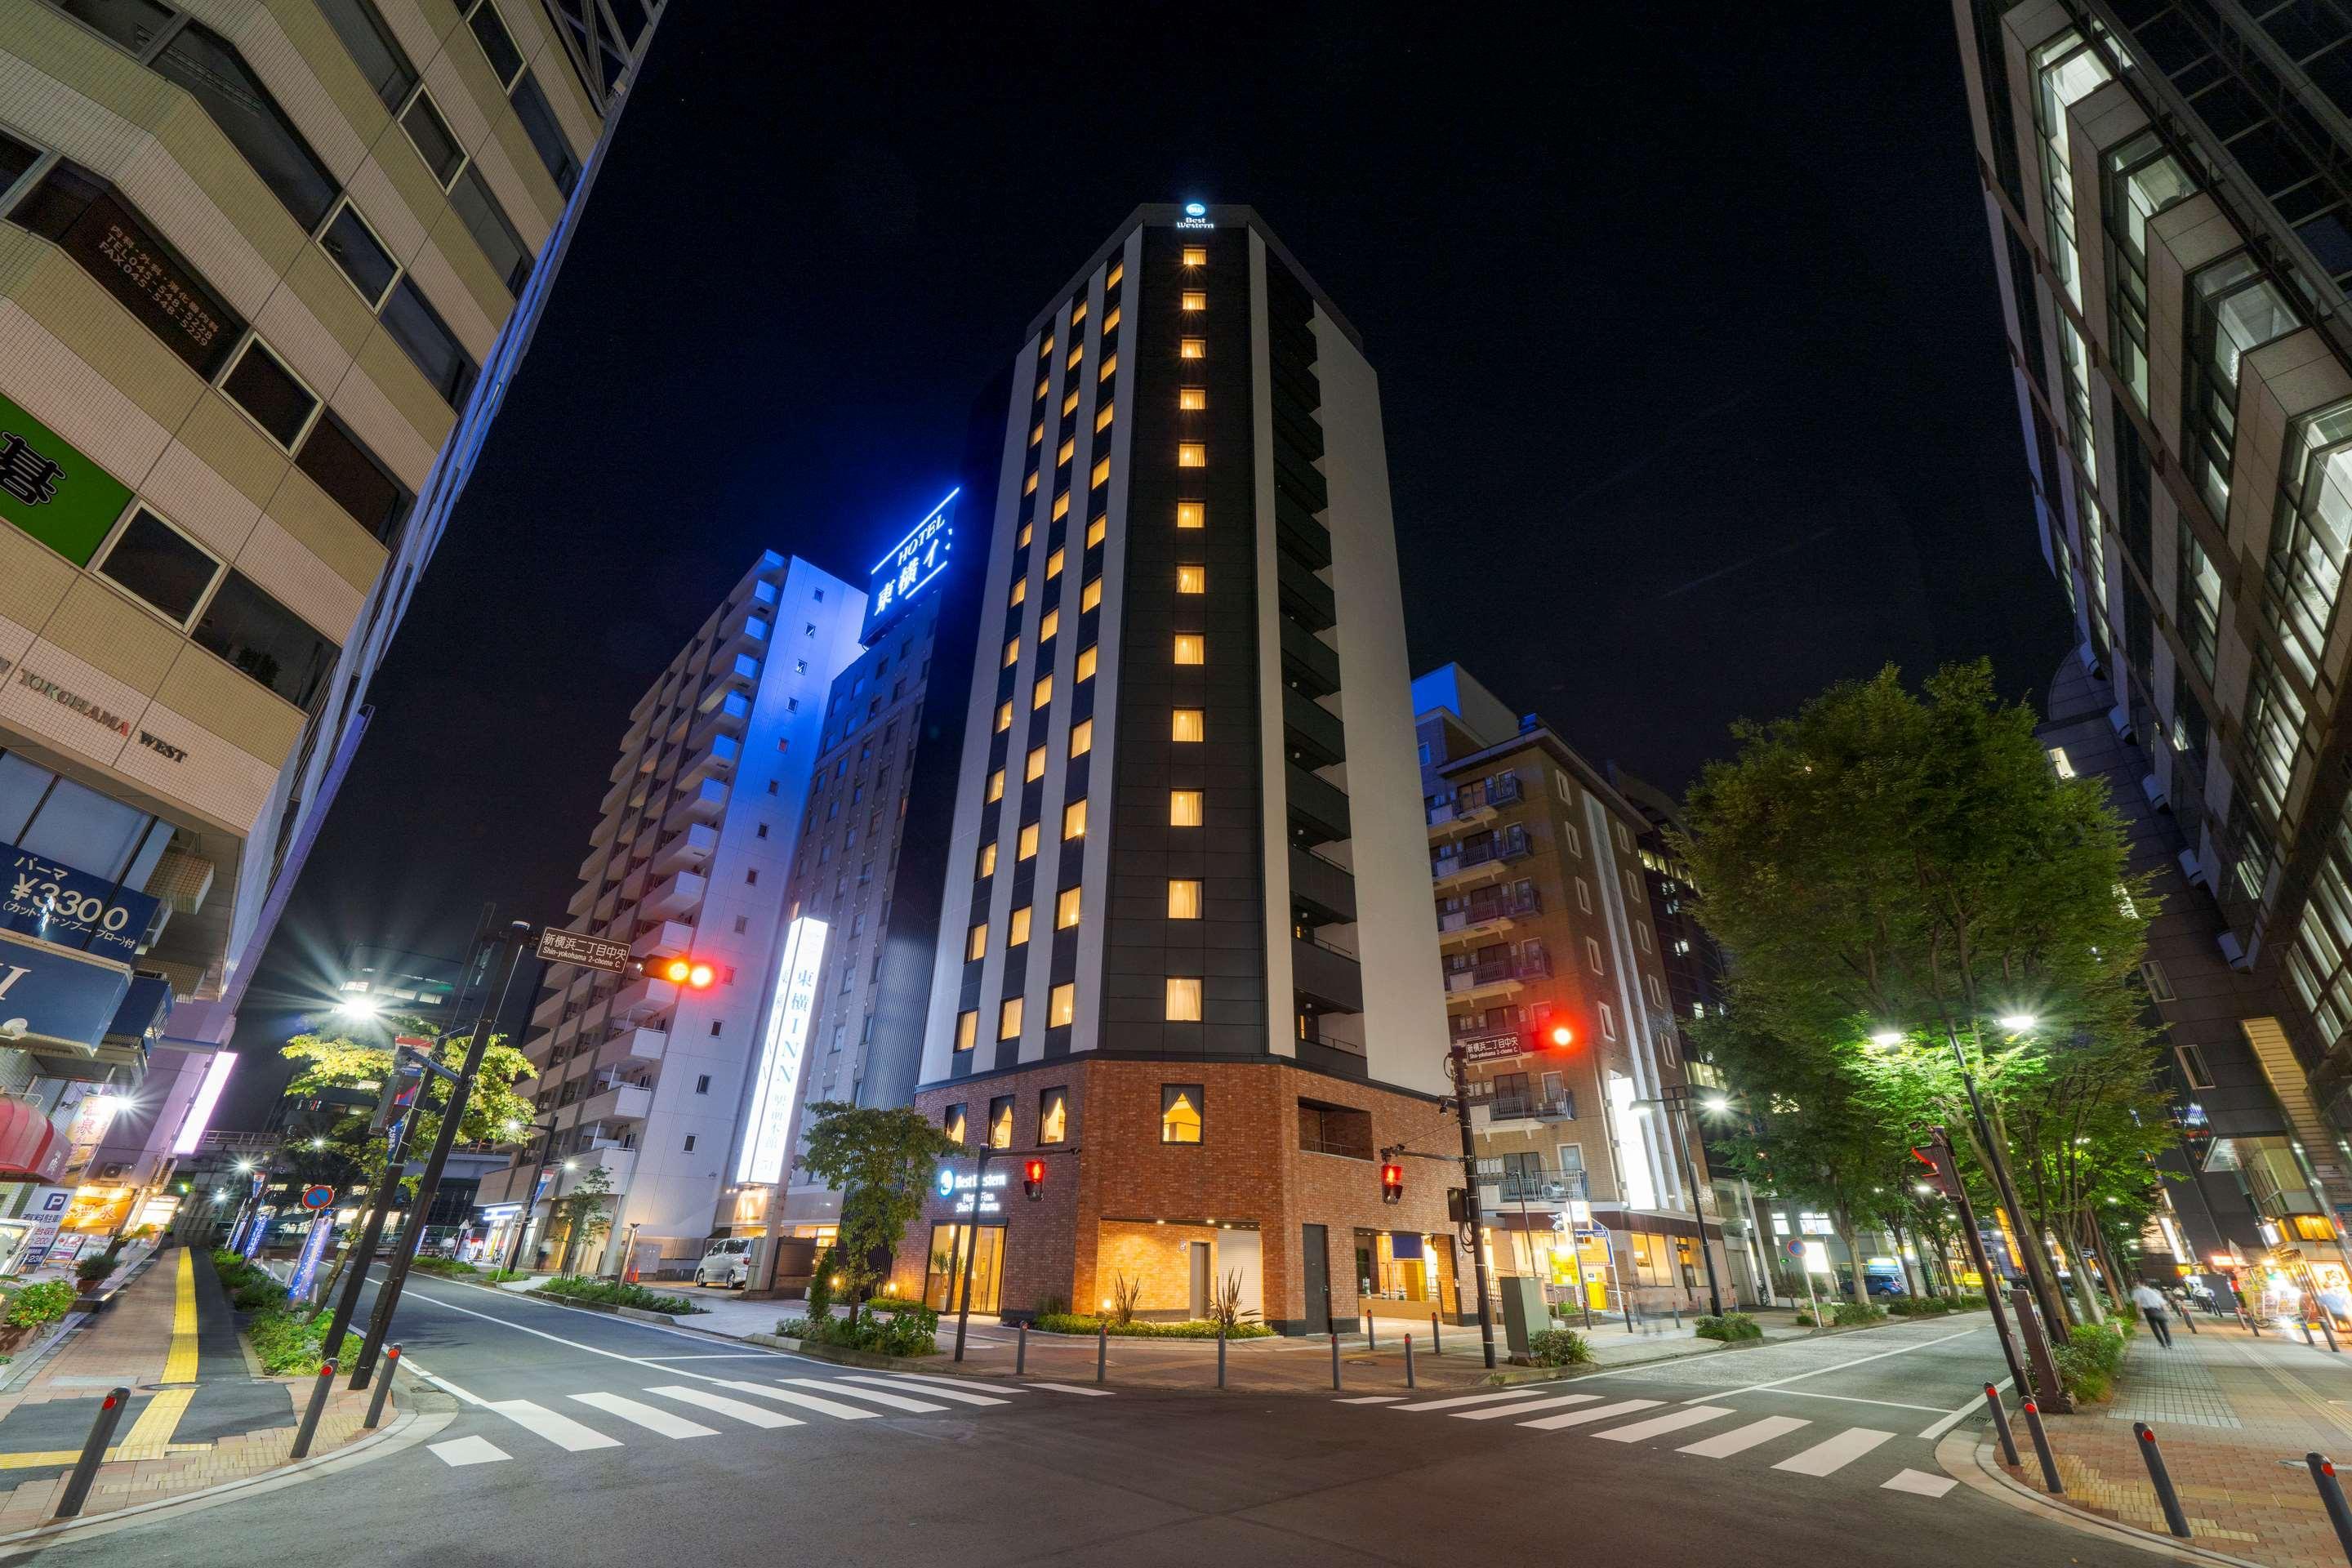 Best Western Hotel Fino Shin-Yokohama Yokohama  Esterno foto